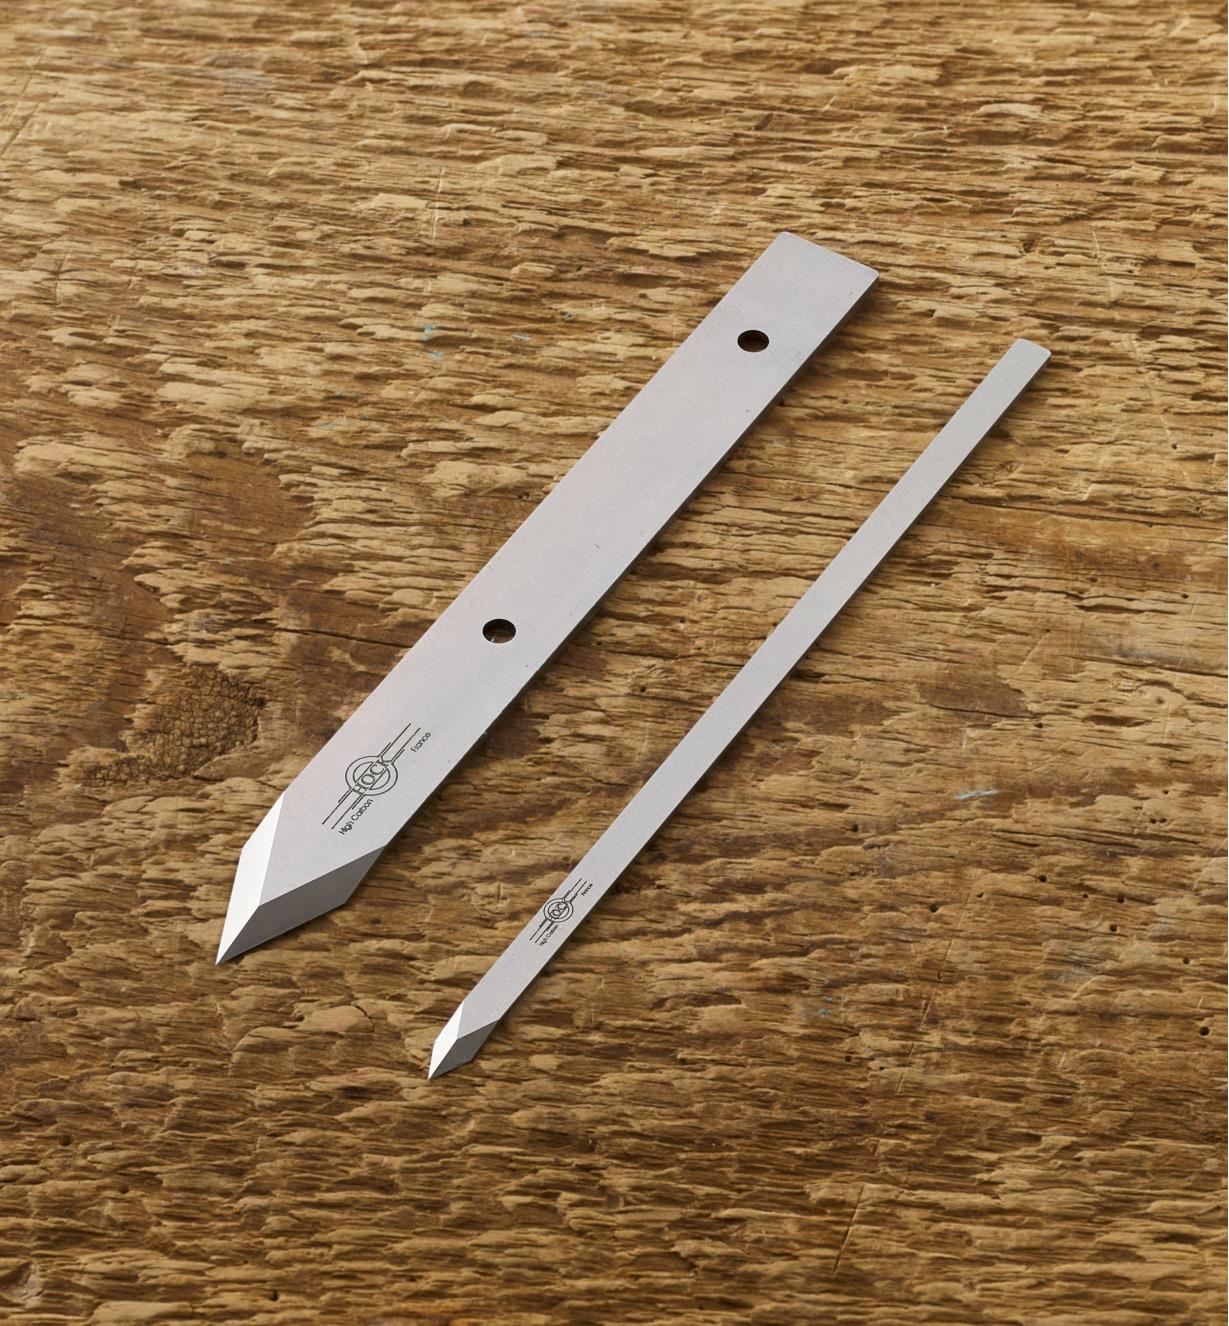 Hock Marking Knife Blades - Lee Valley Tools